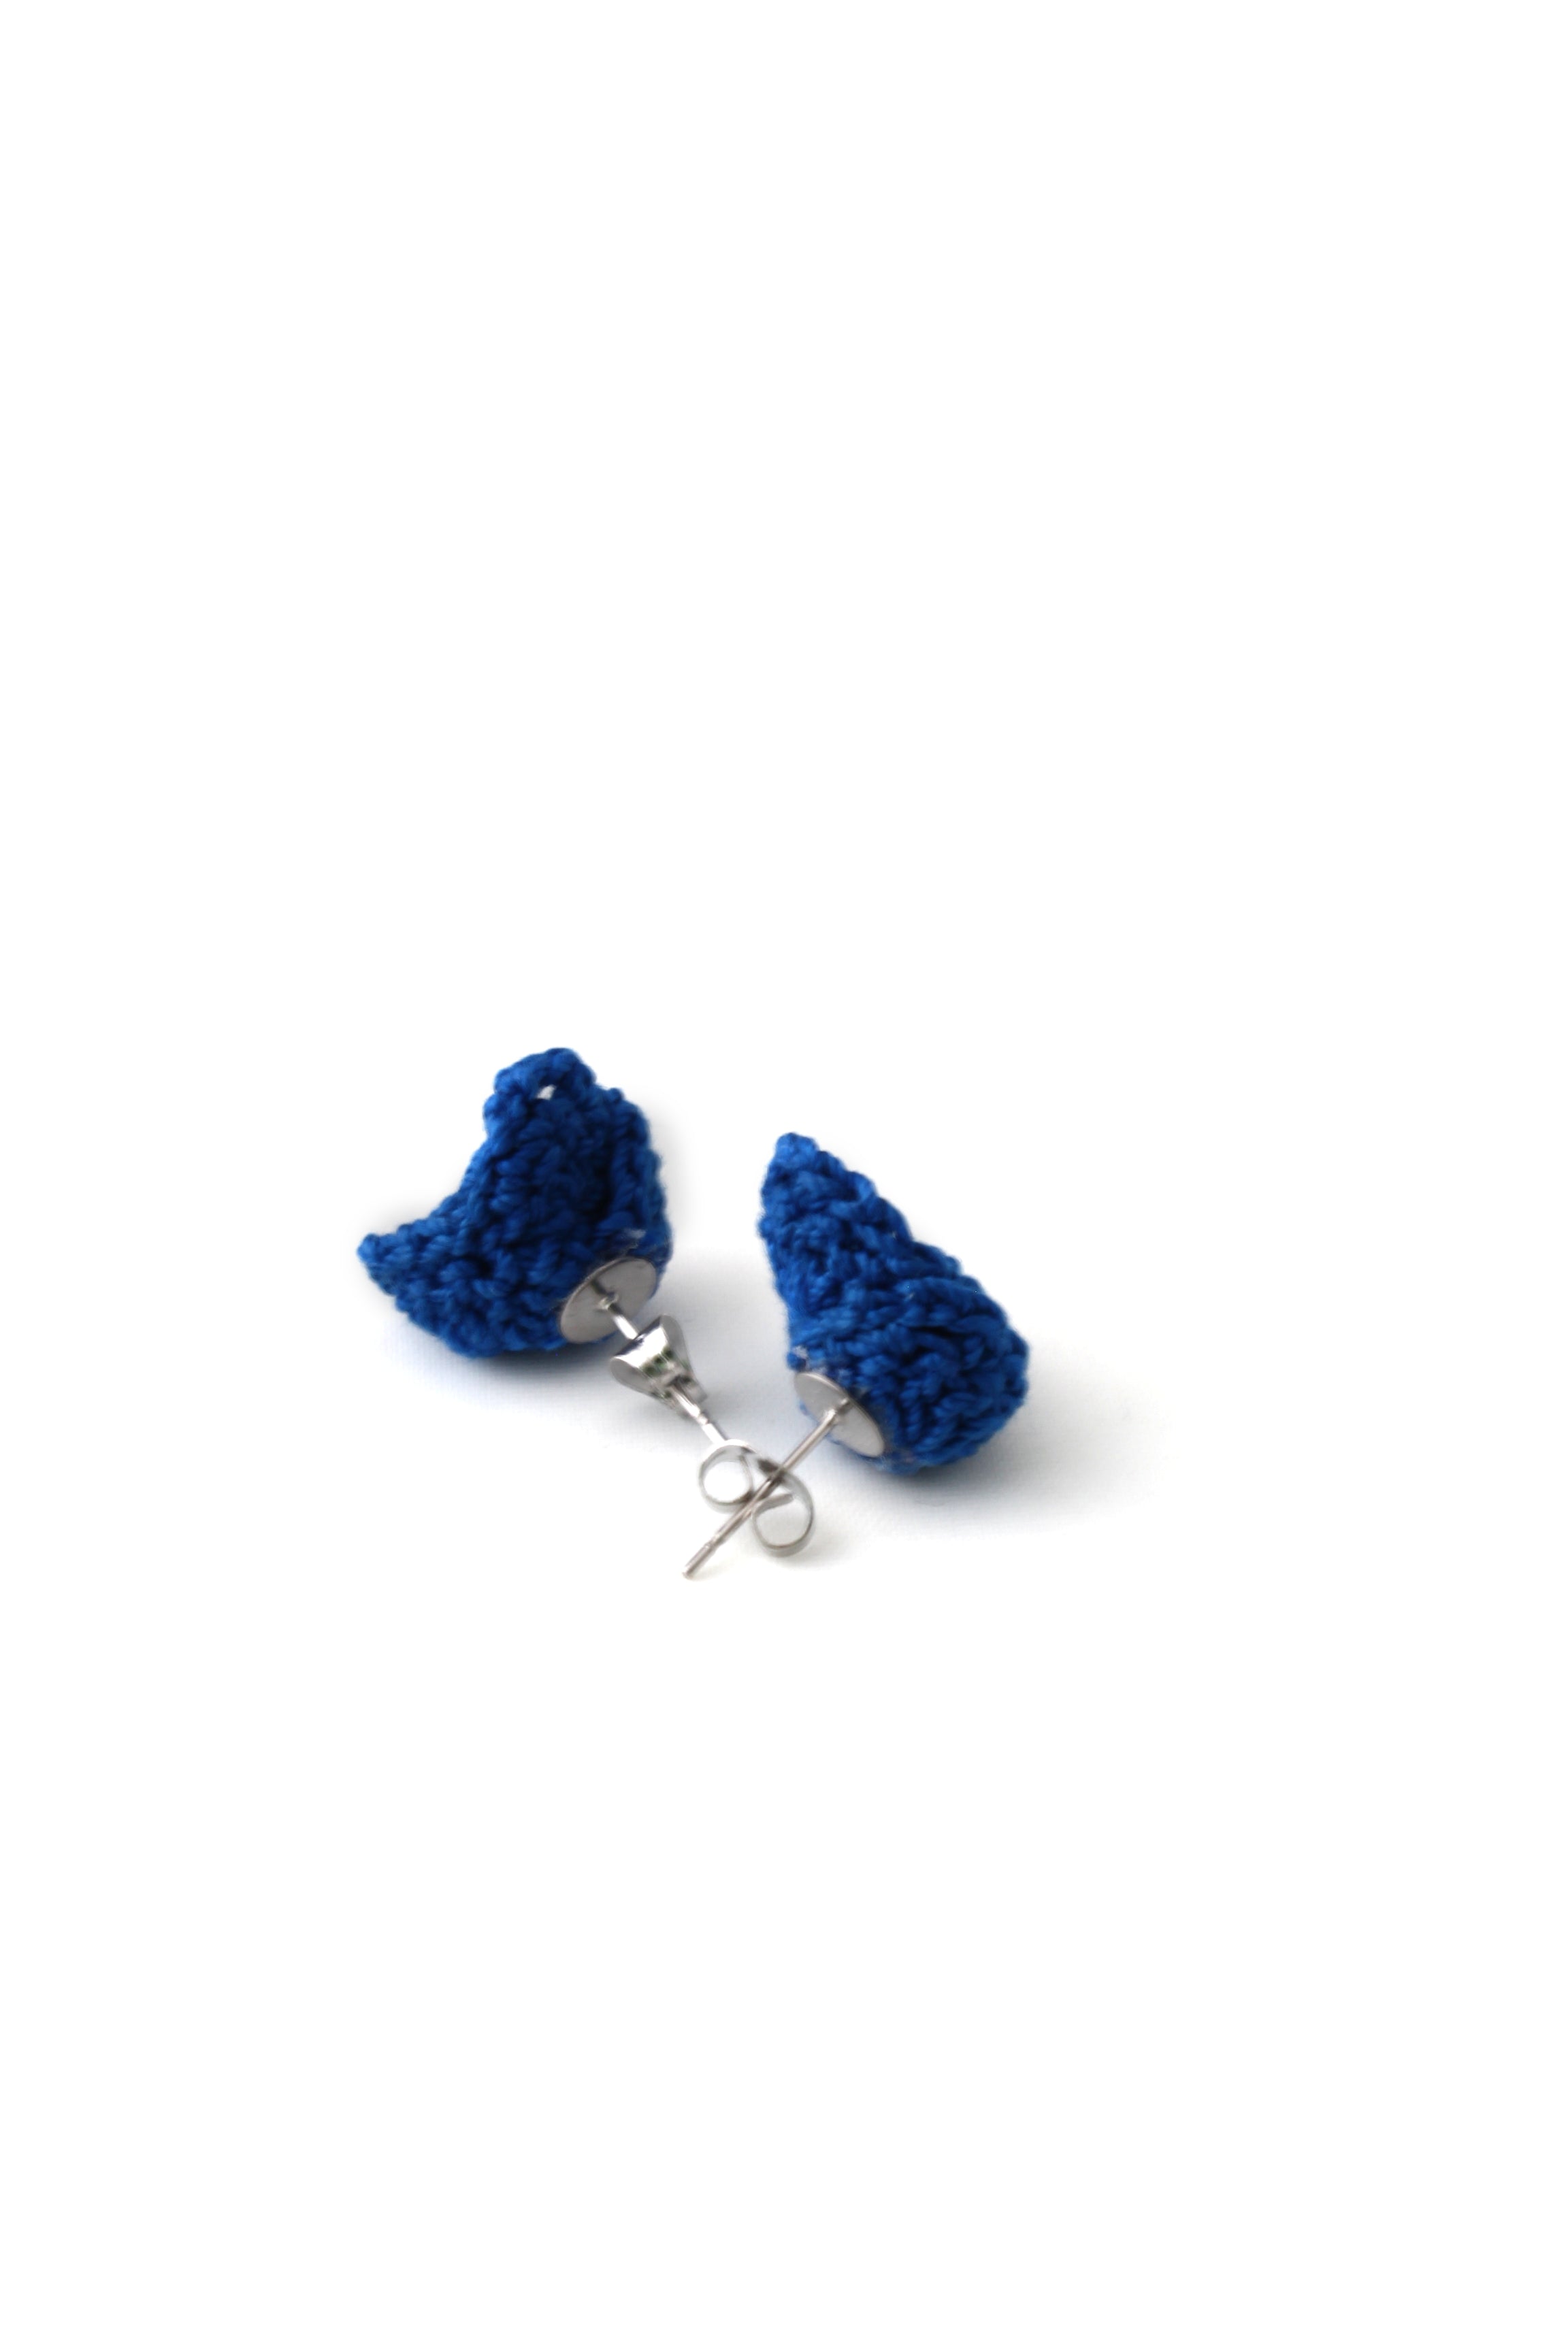 My Pretty Babi Crochet Rose Stainless Steel Silver Studs Earrings in Royal Blue